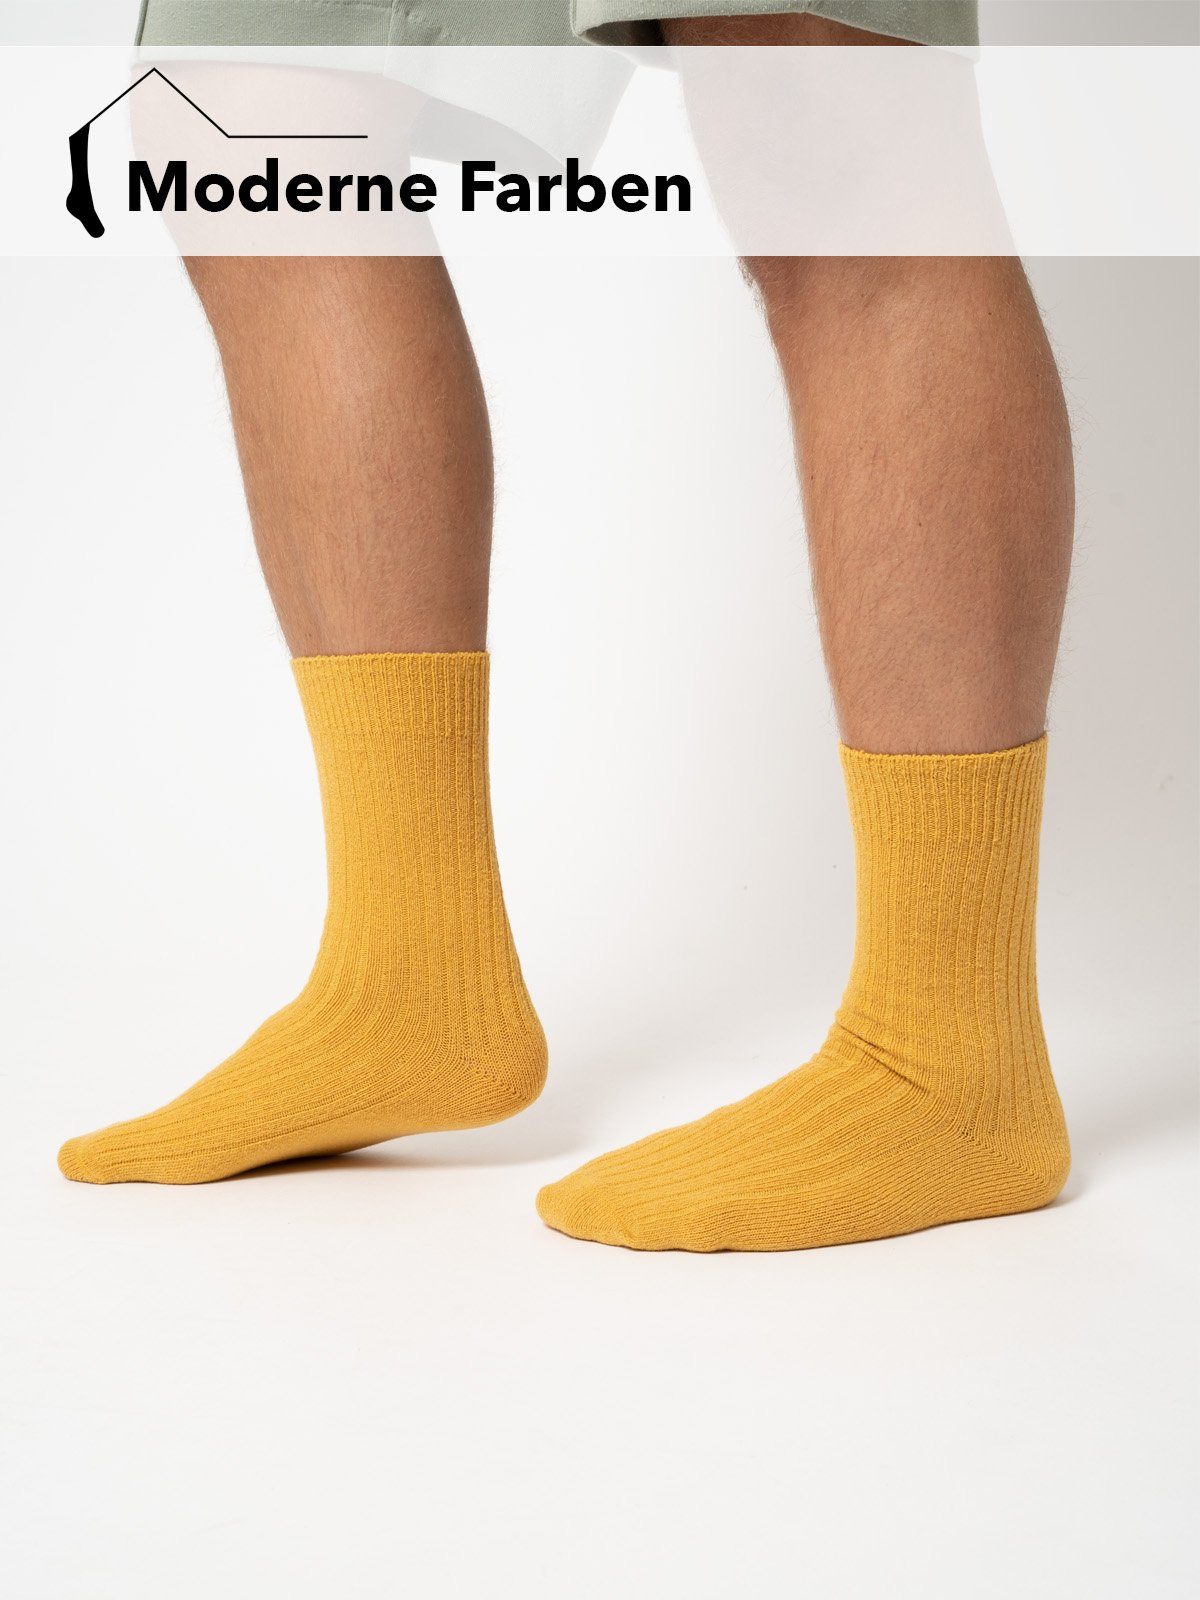 Bunt Dünn Druckarm HomeOfSocks Wollsocken 72% Creme Hochwertige Wollsocken Socken mit Wollanteil Bunte Dünne Uni